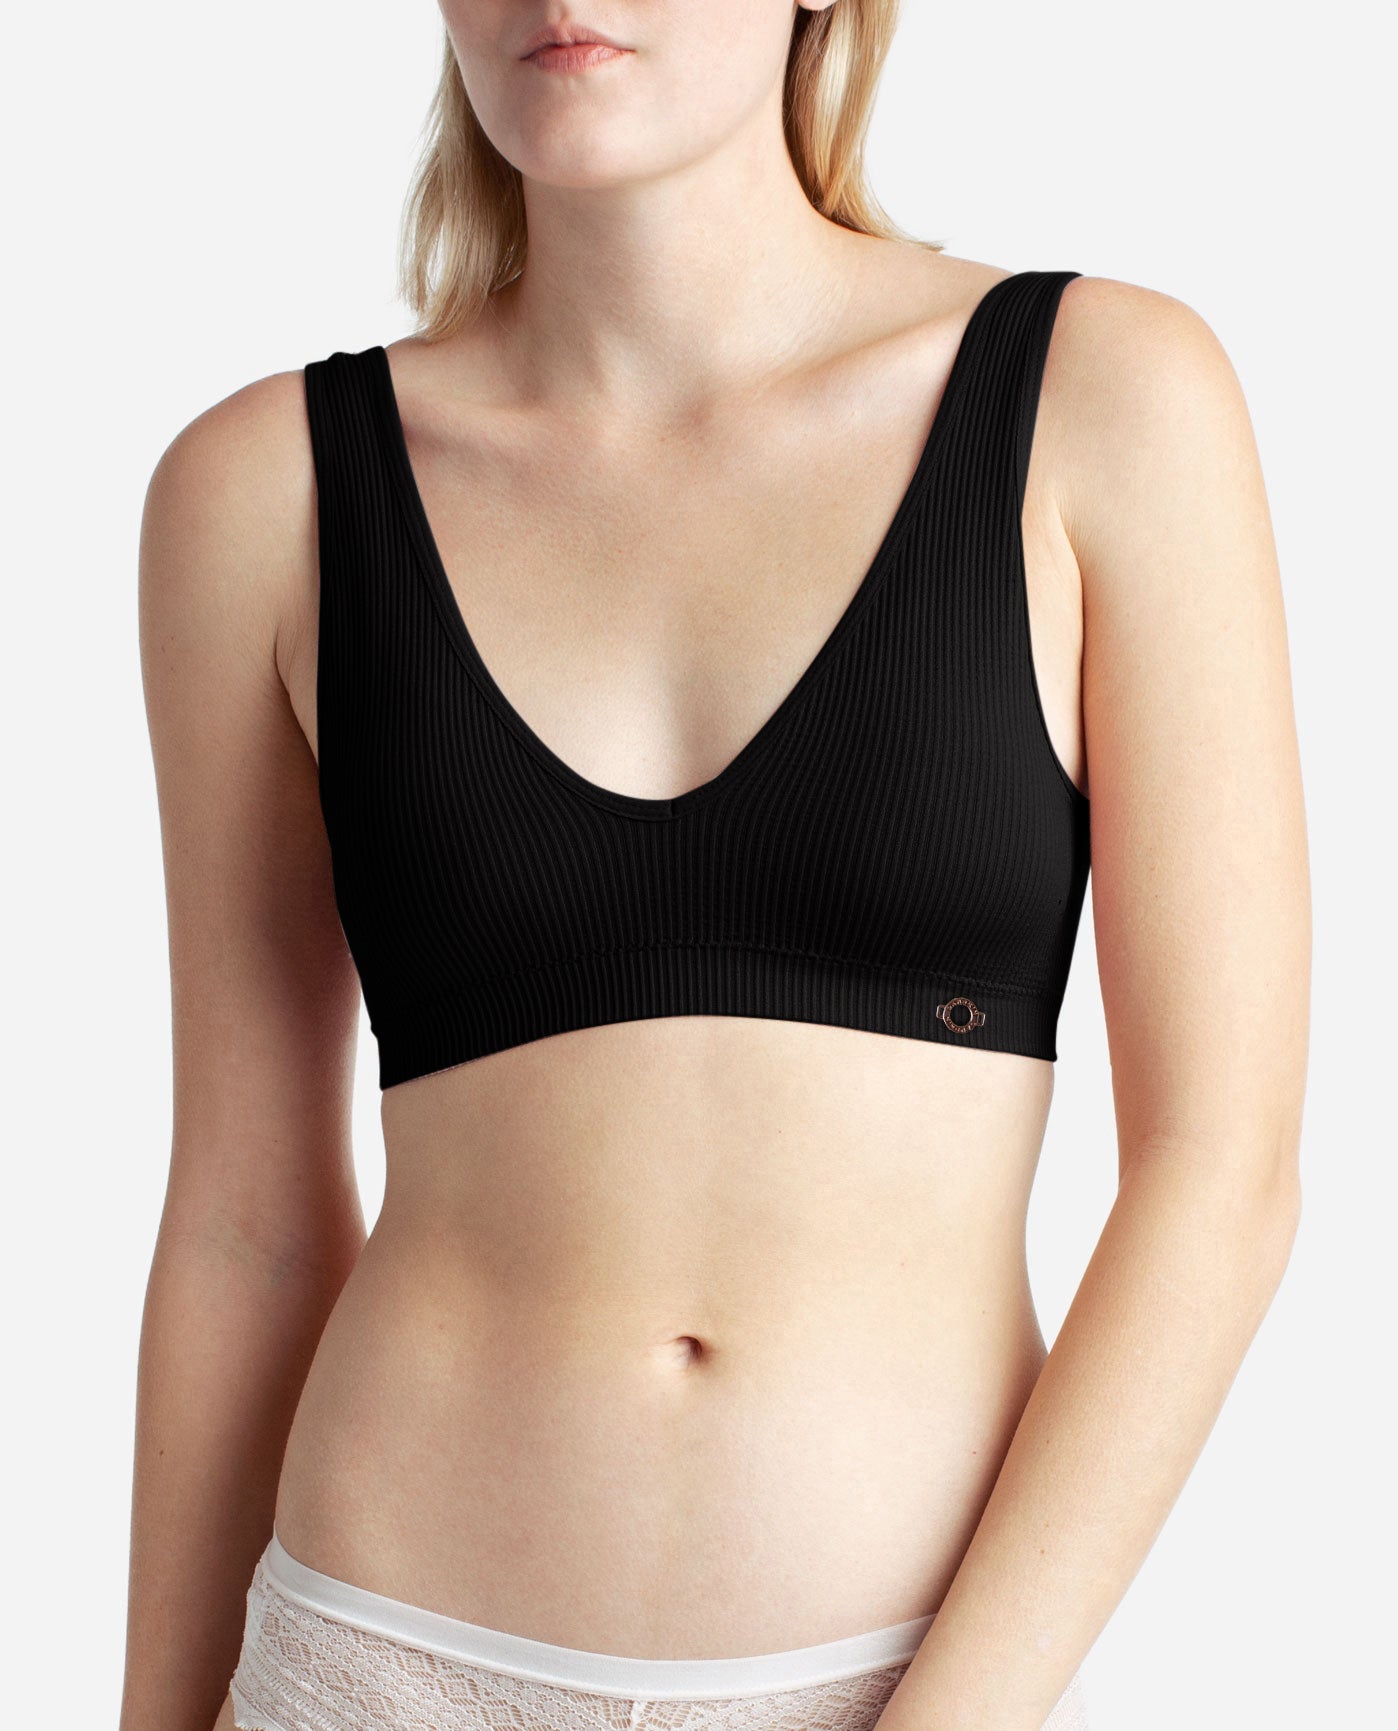 Wholesale deep v neck bra For Supportive Underwear 